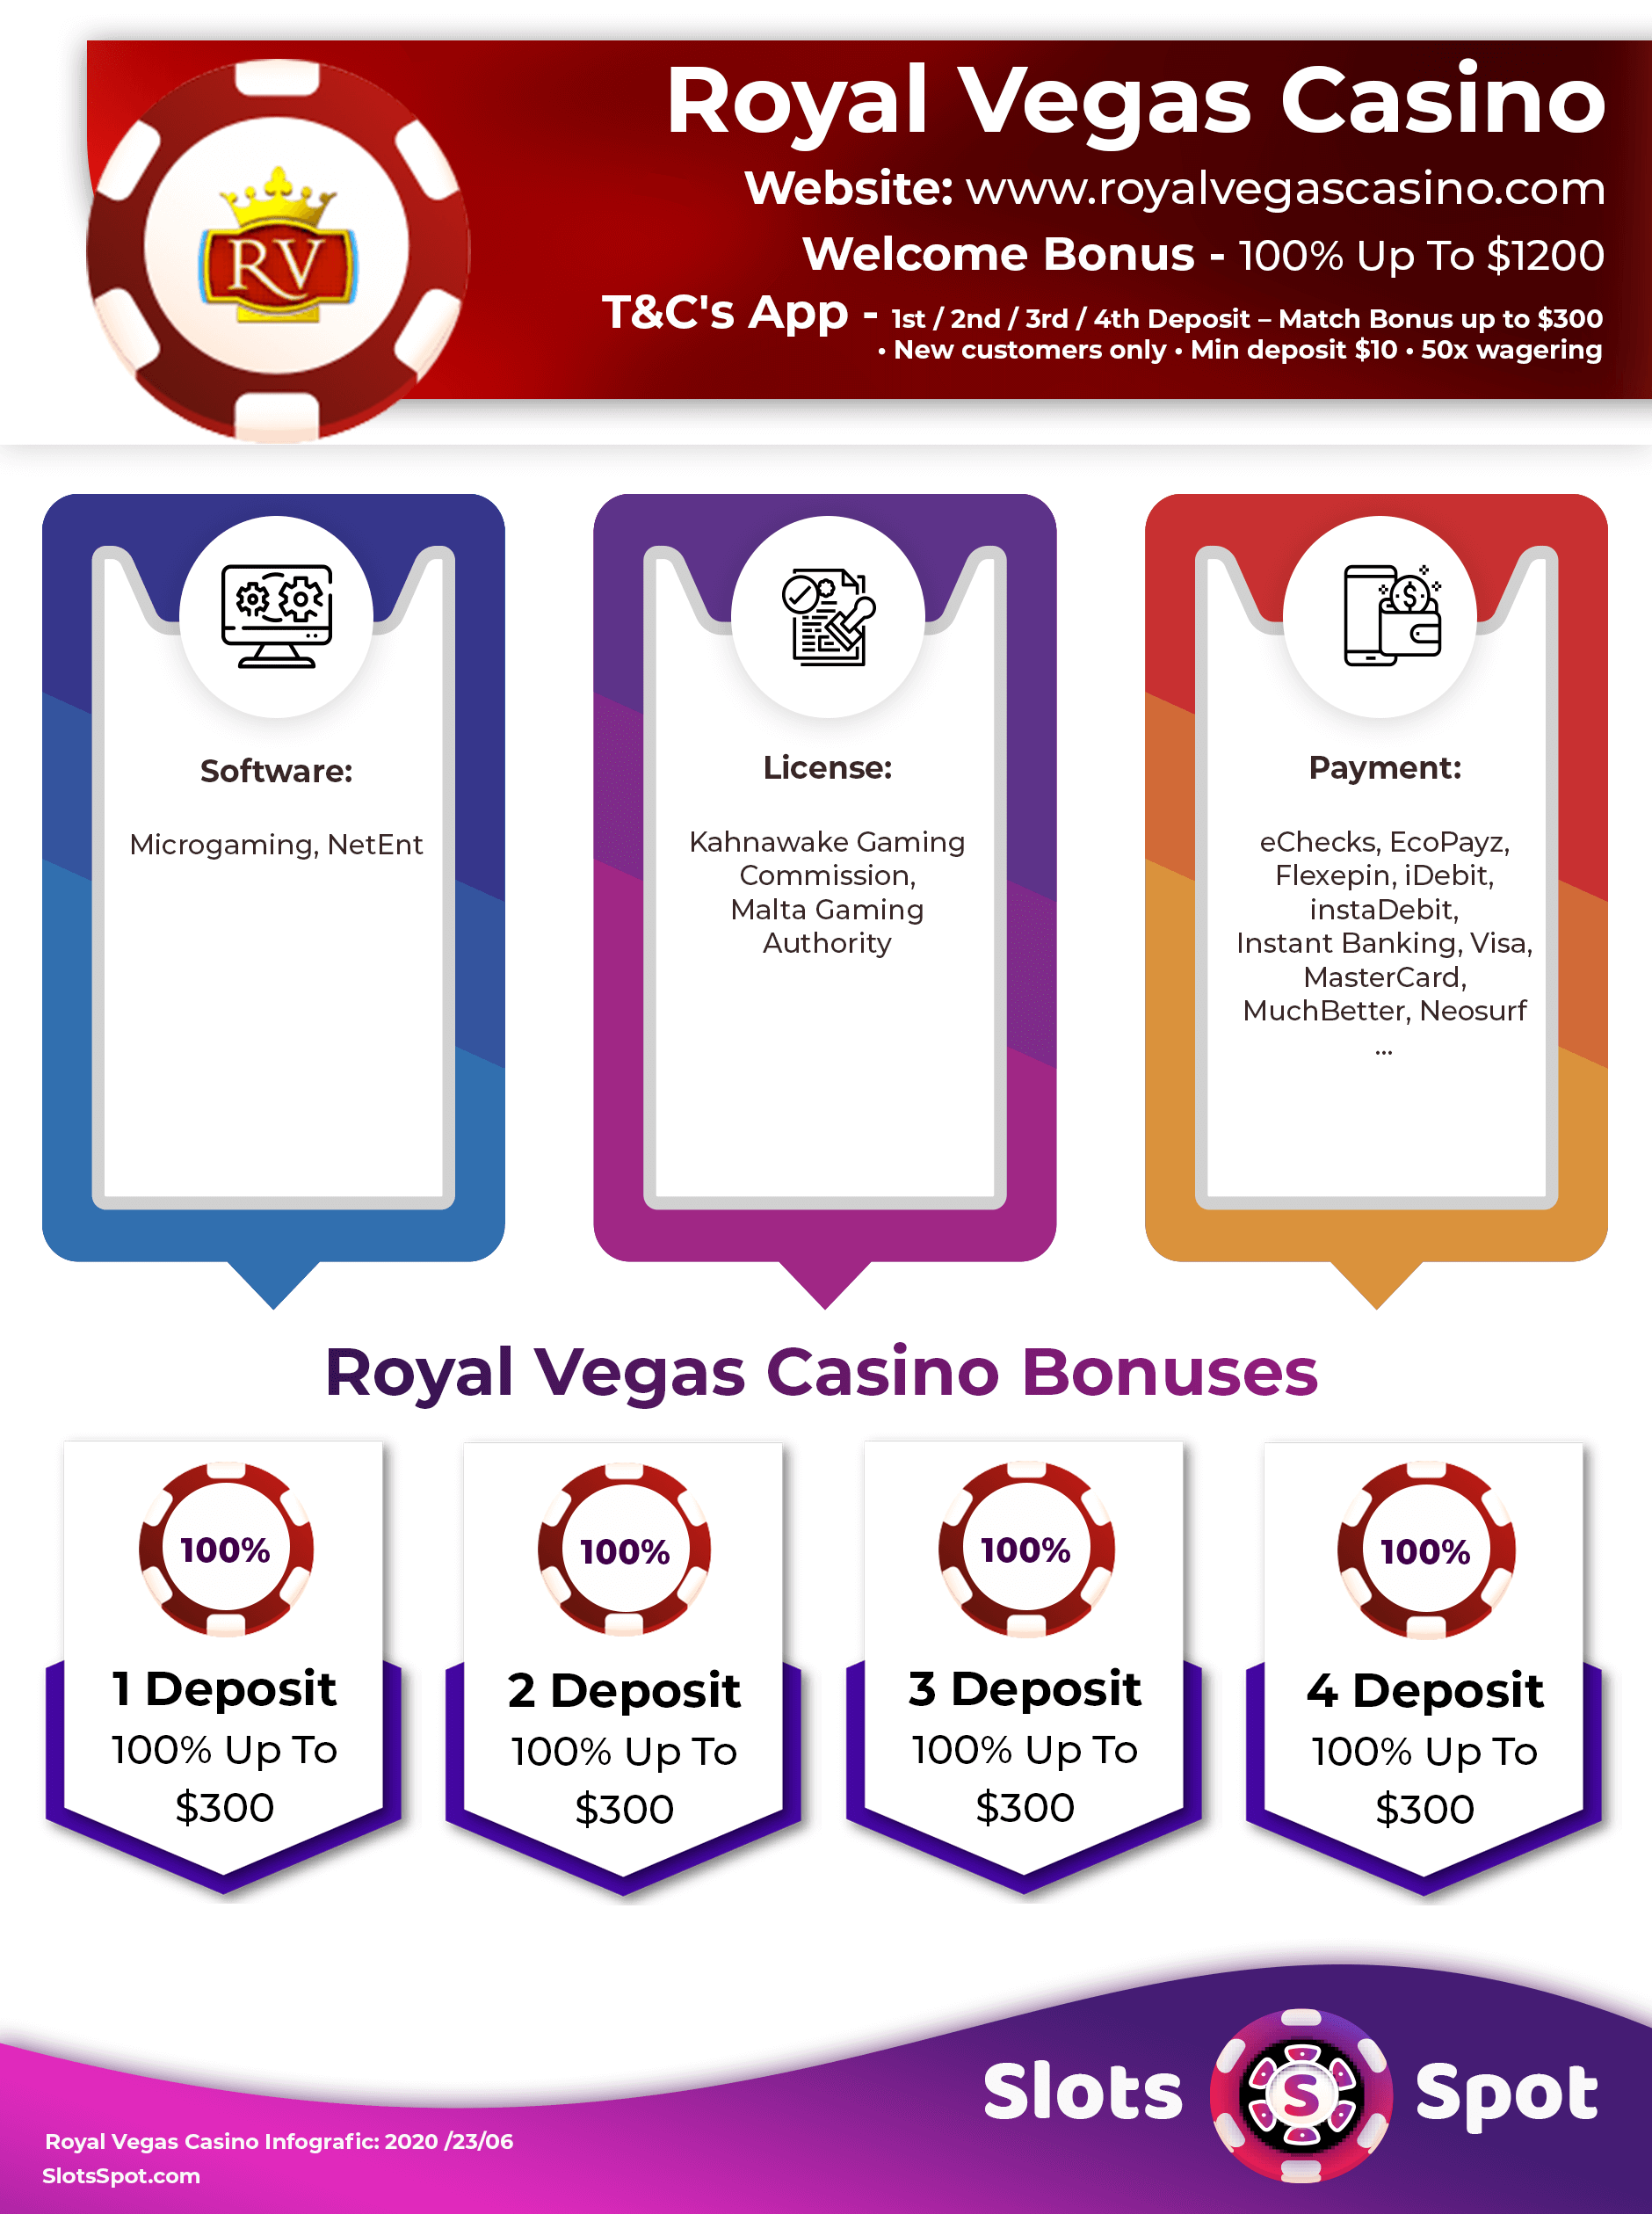 Royal vegas no deposit bonus codes 2017 june